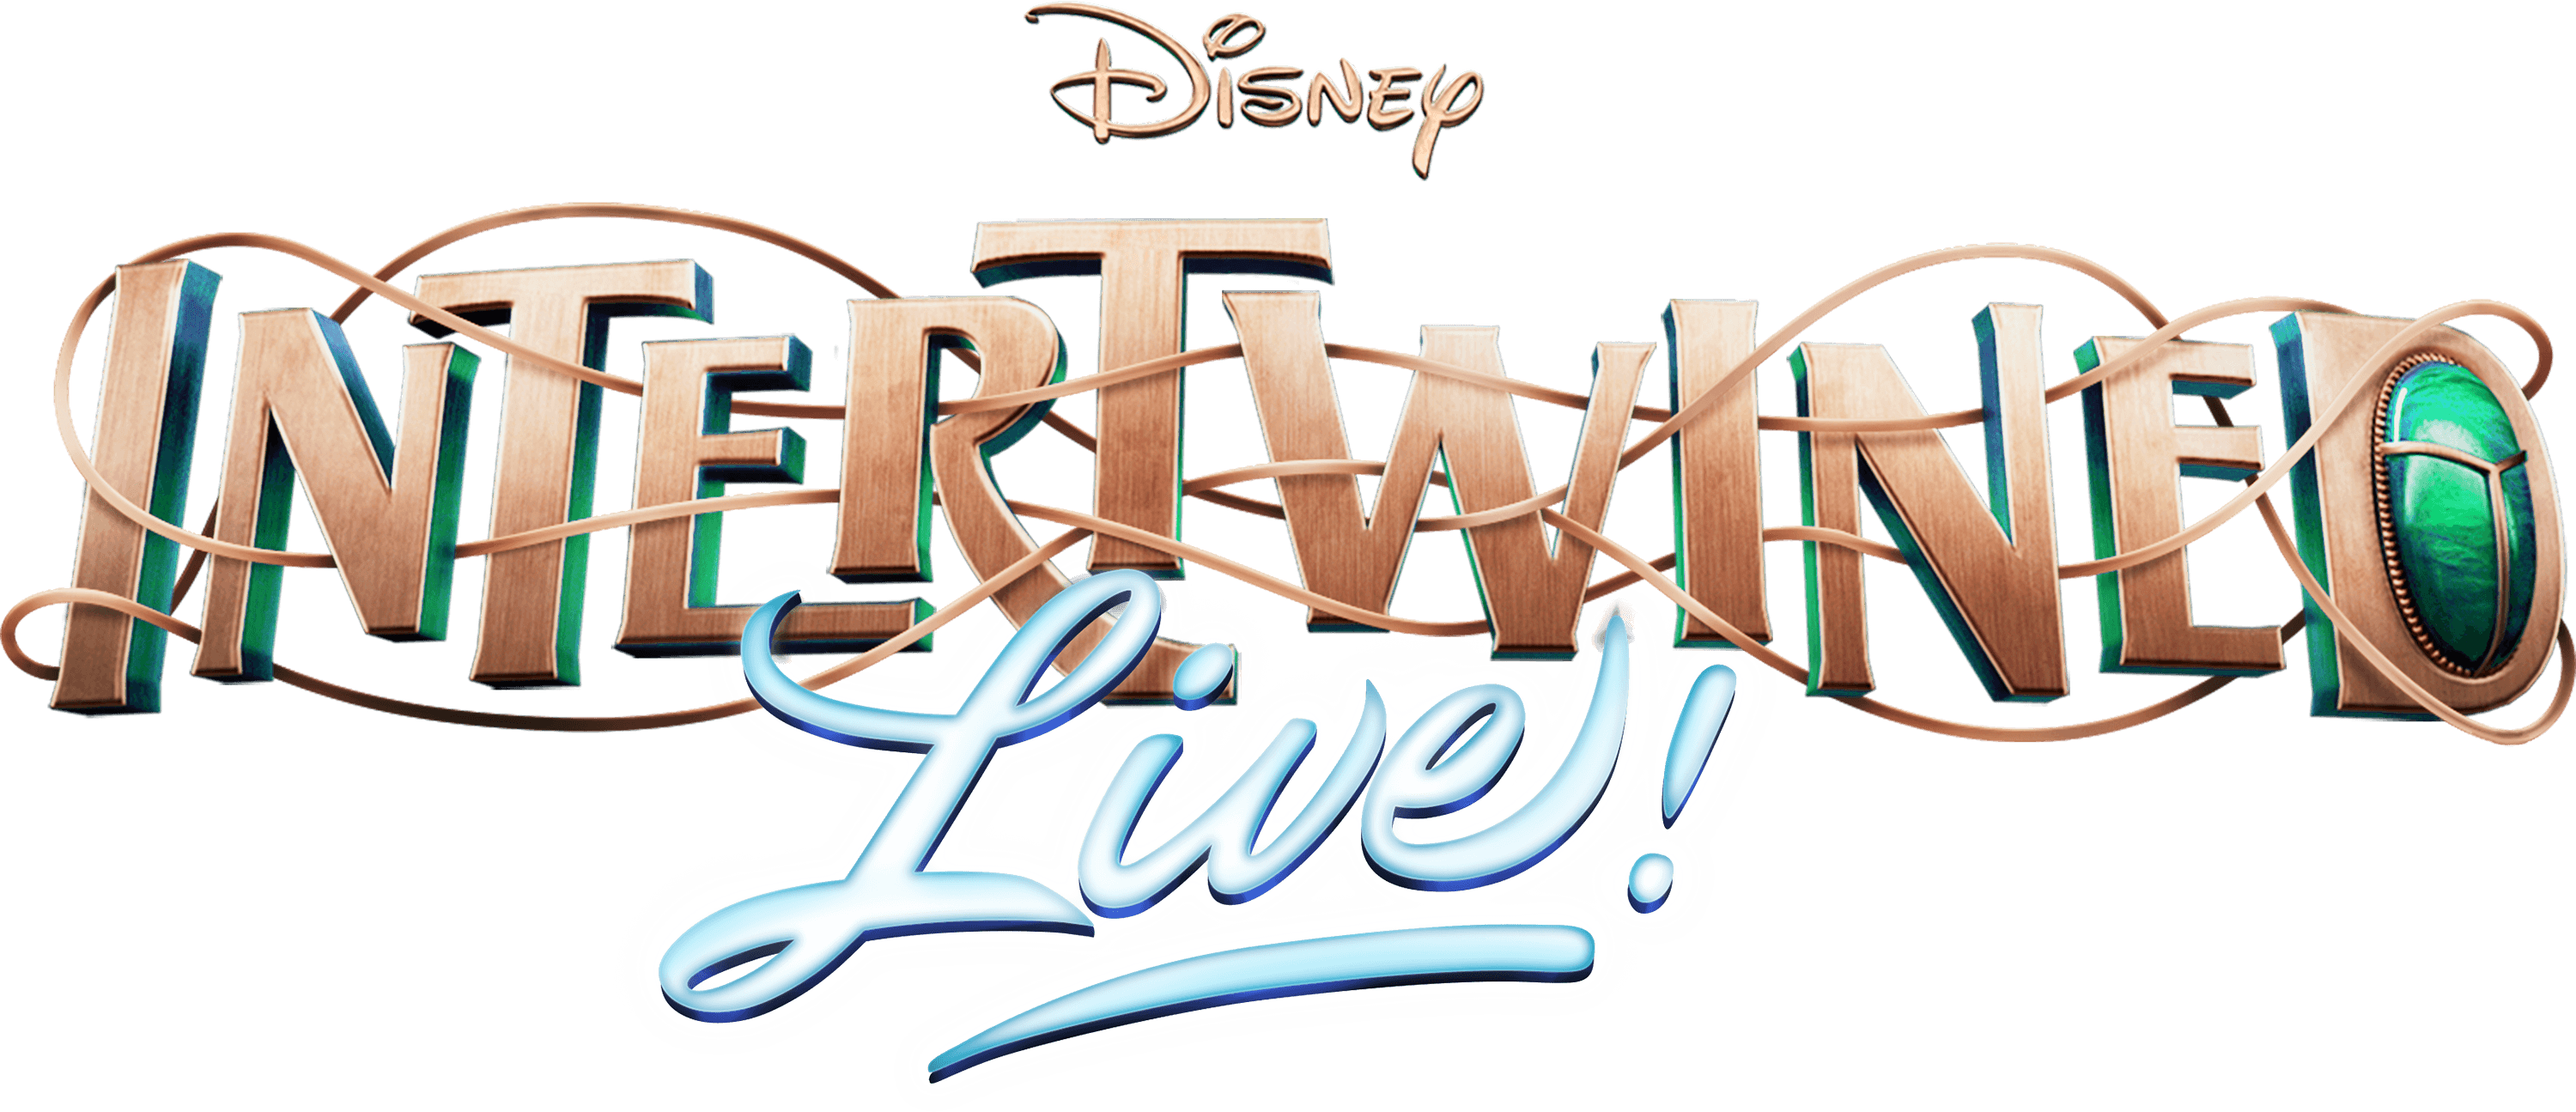 Disney Intertwined Live logo